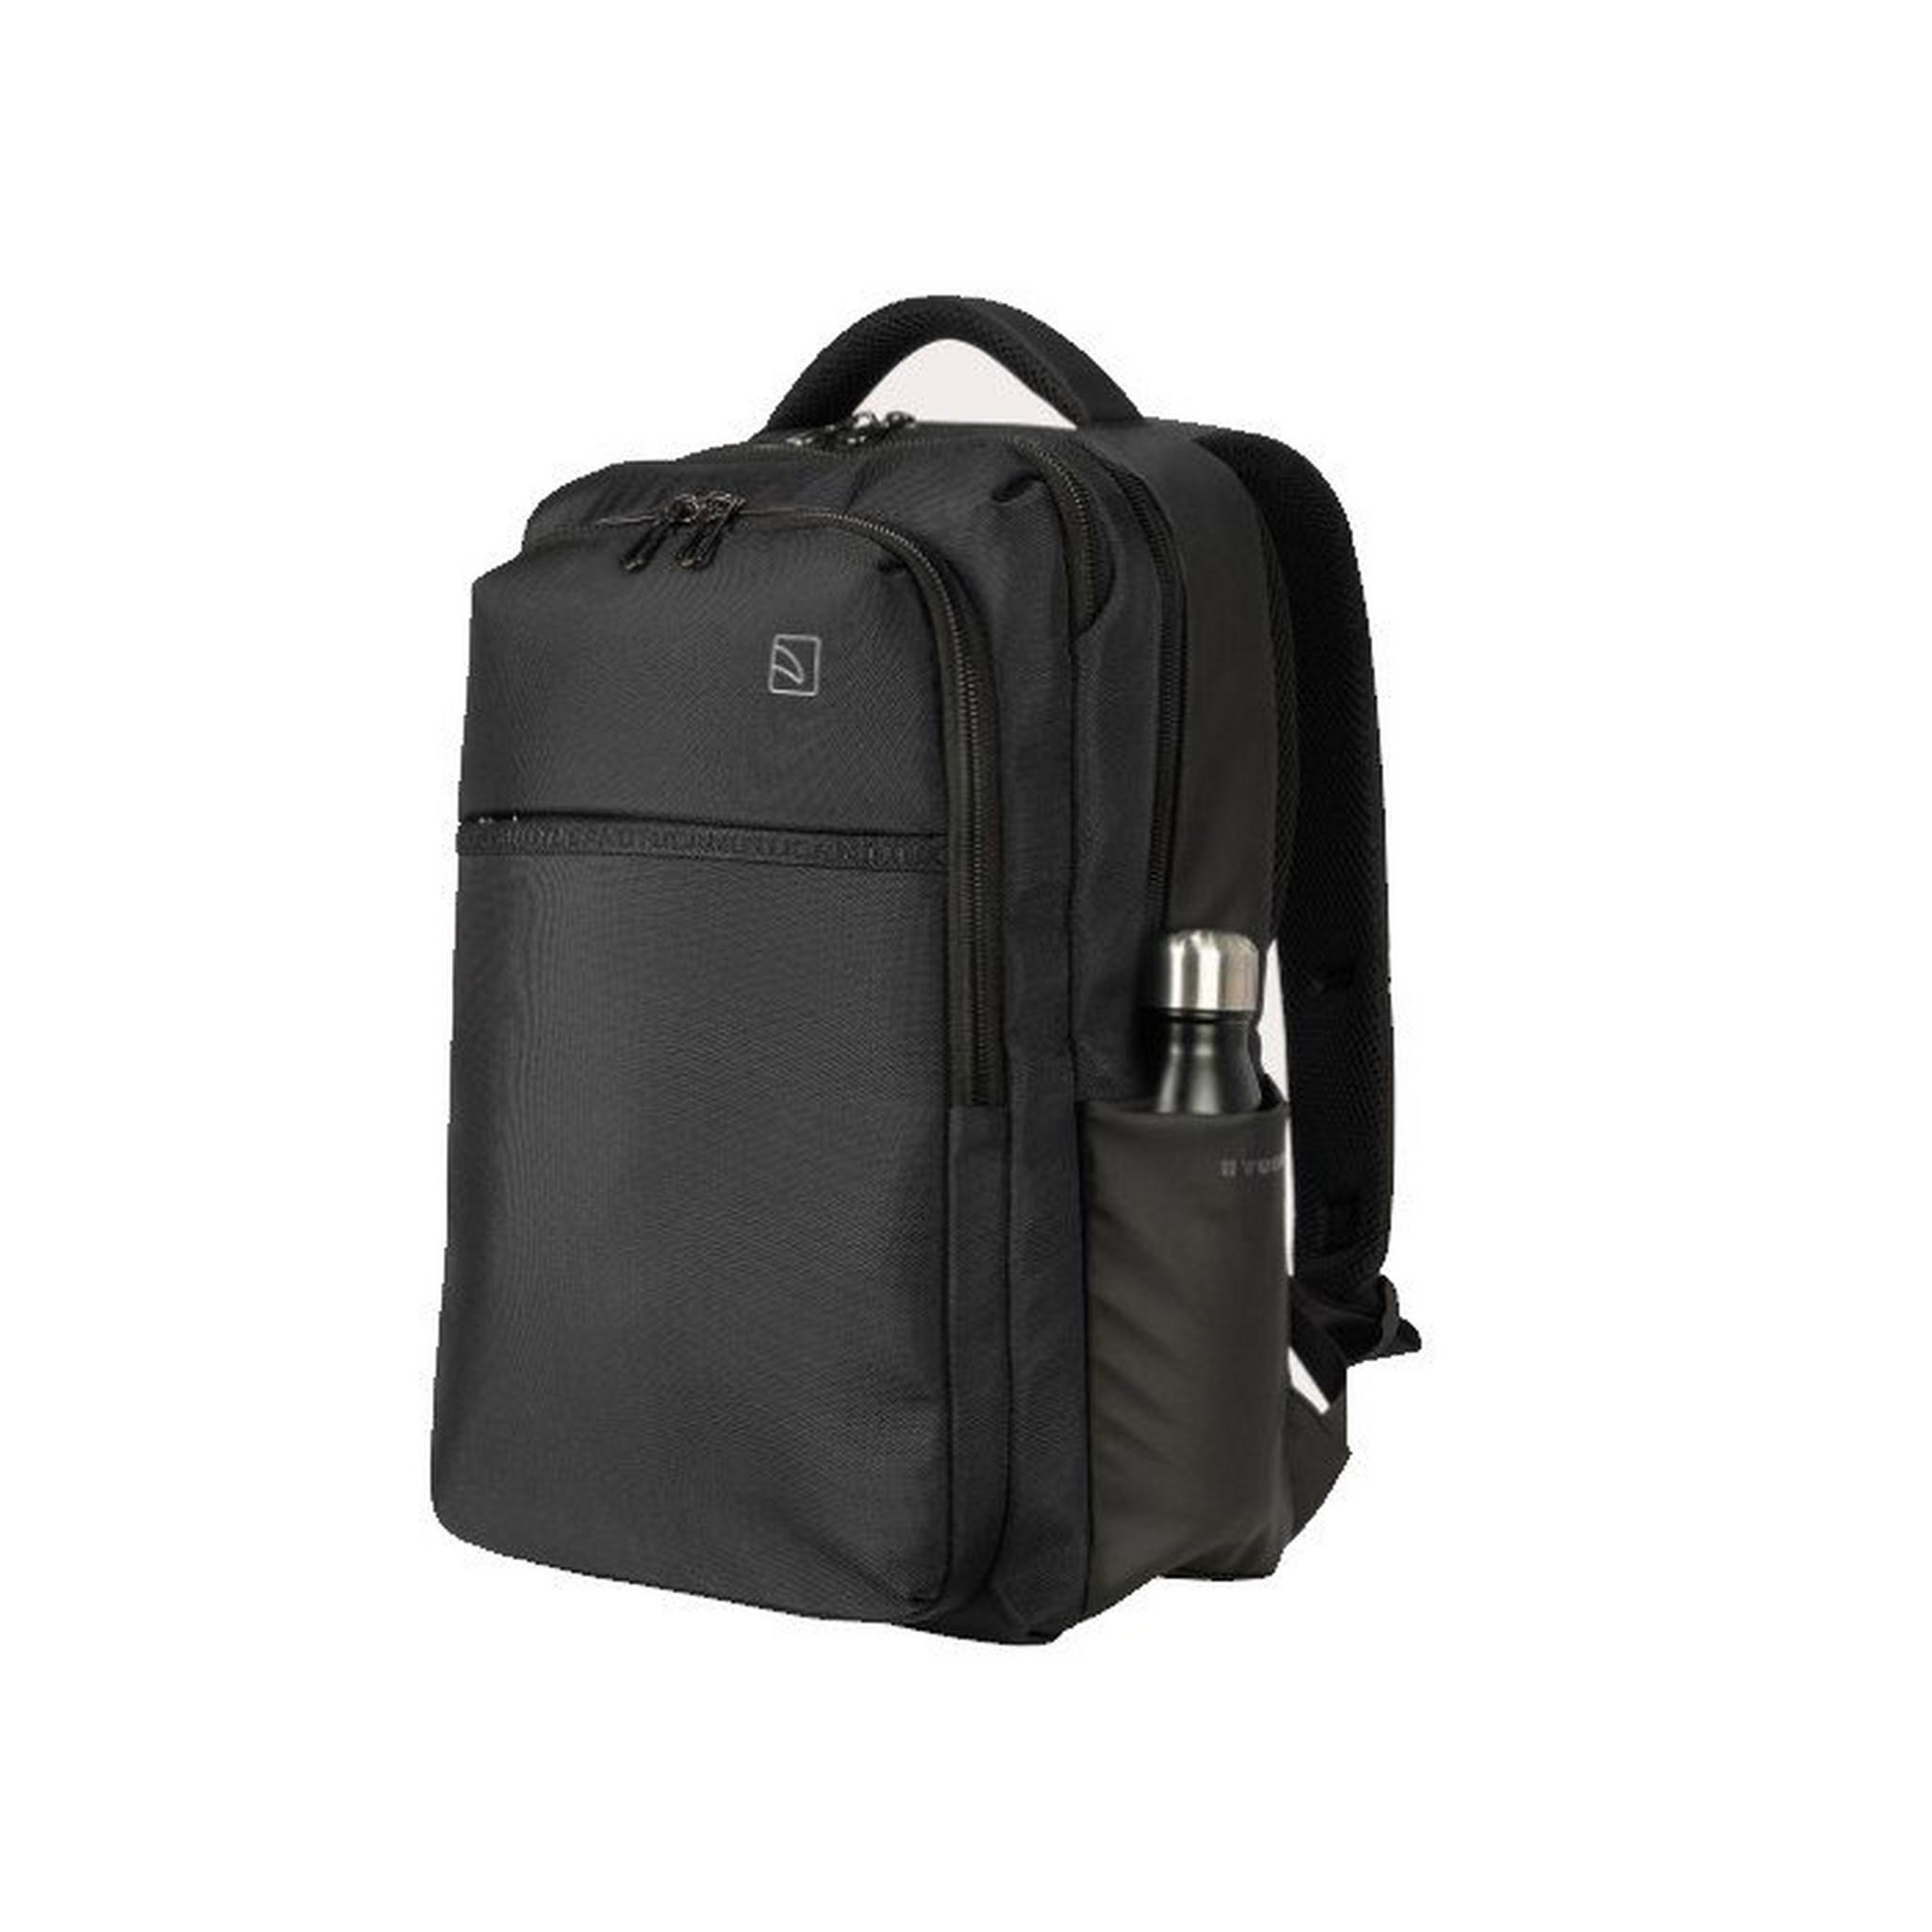 TUCANO Marte Gravity Laptop Backpack, 15.6" Laptops & 16" MacBook Pro, BKMAR15-AGS-BK – Black